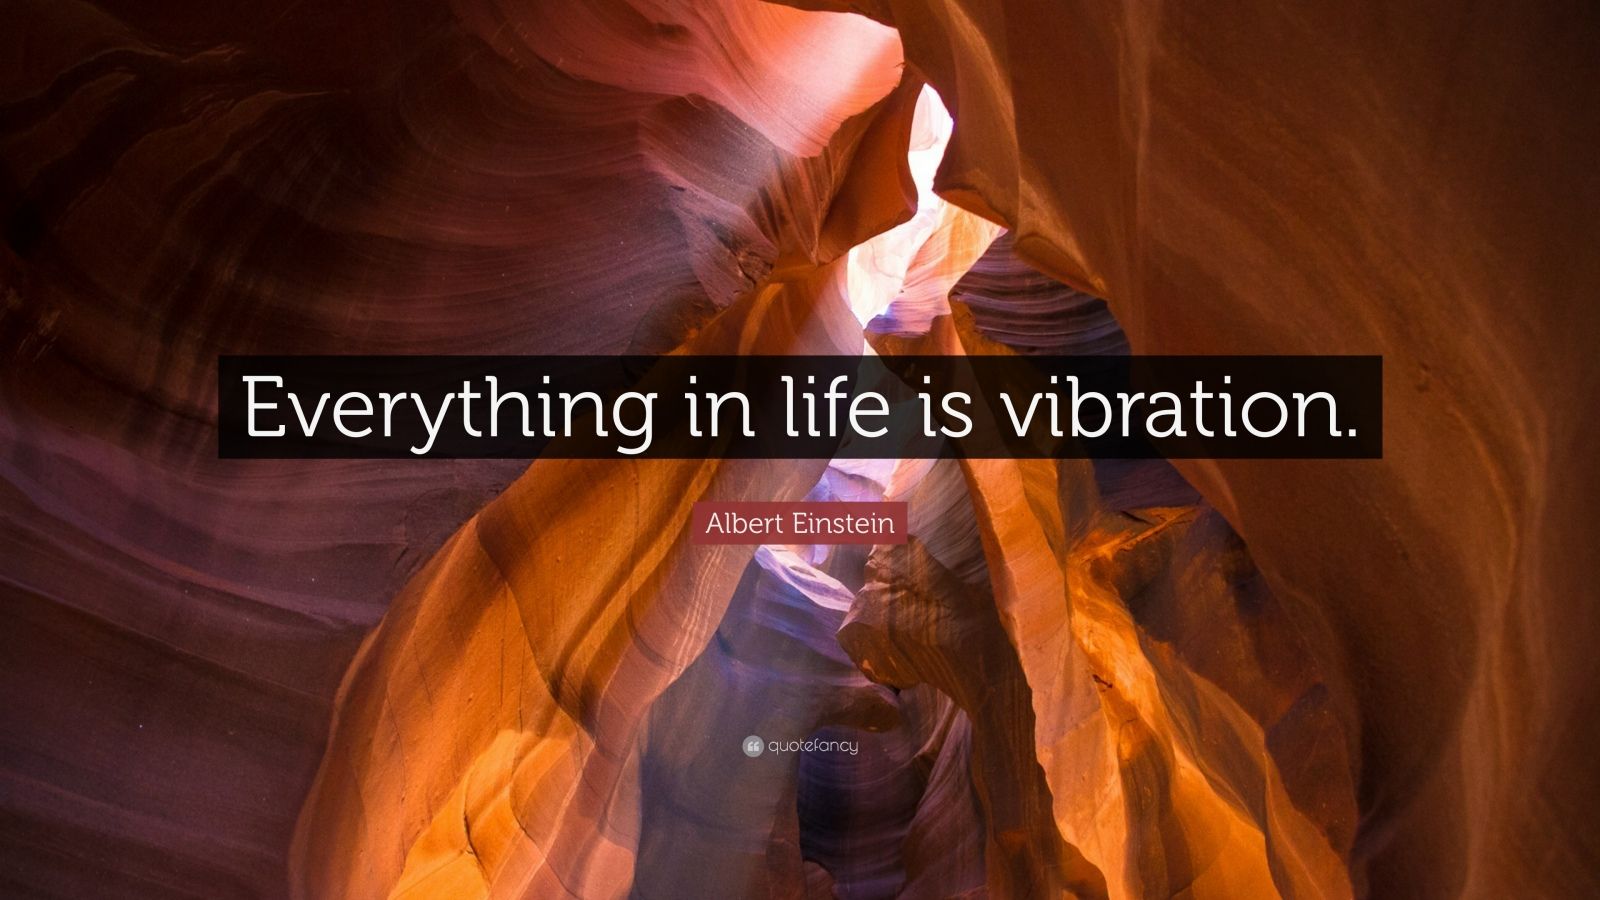 Albert Einstein Quote: “Everything in life is vibration.” (10